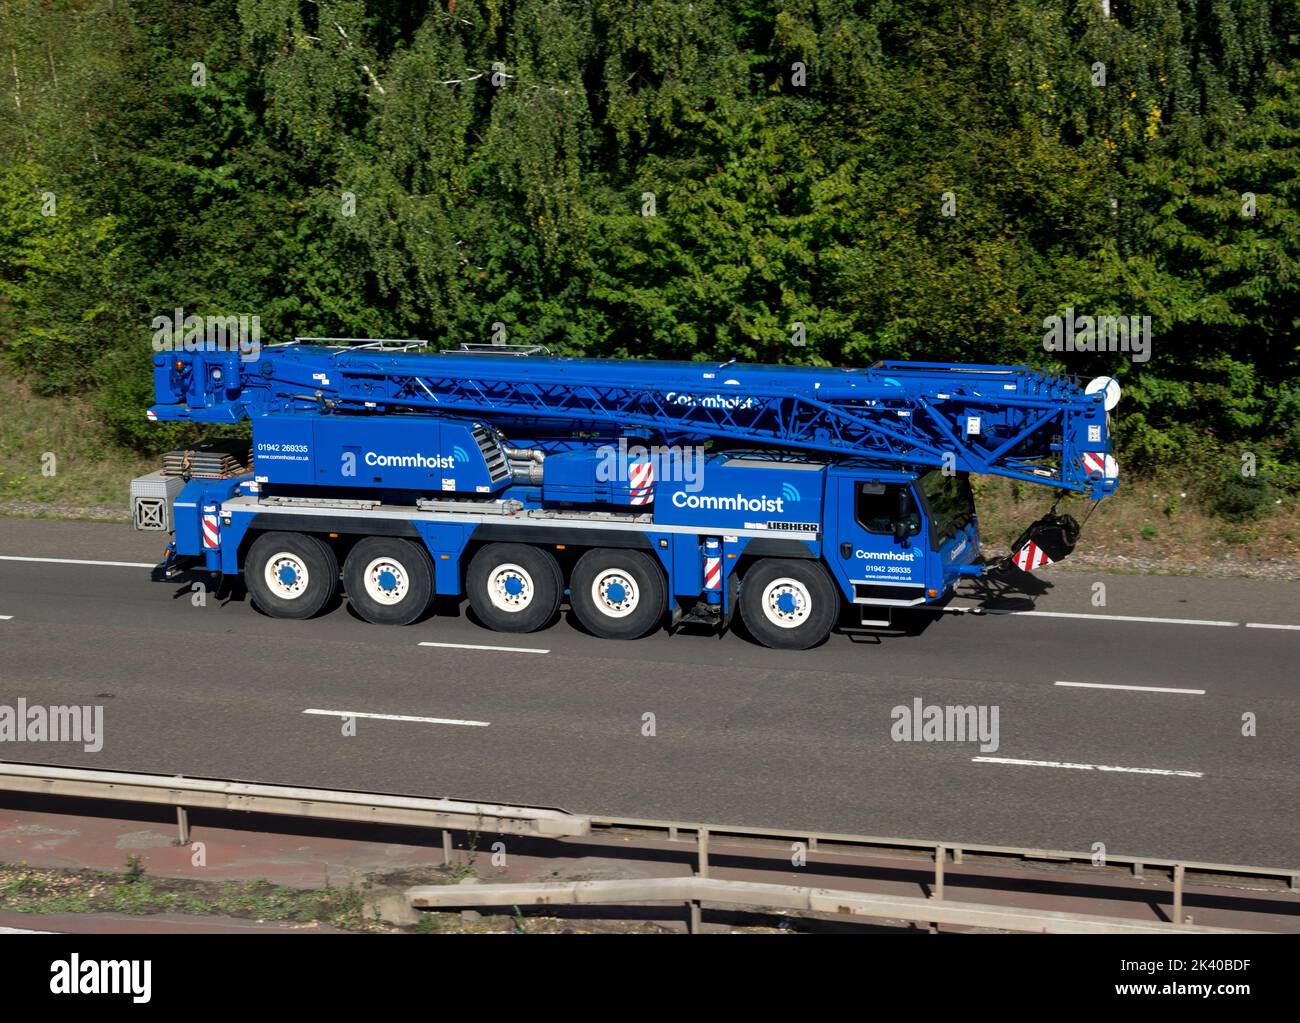 Commhoist lorry on the M40 motorway, Warwickshire, UK Stock Photo